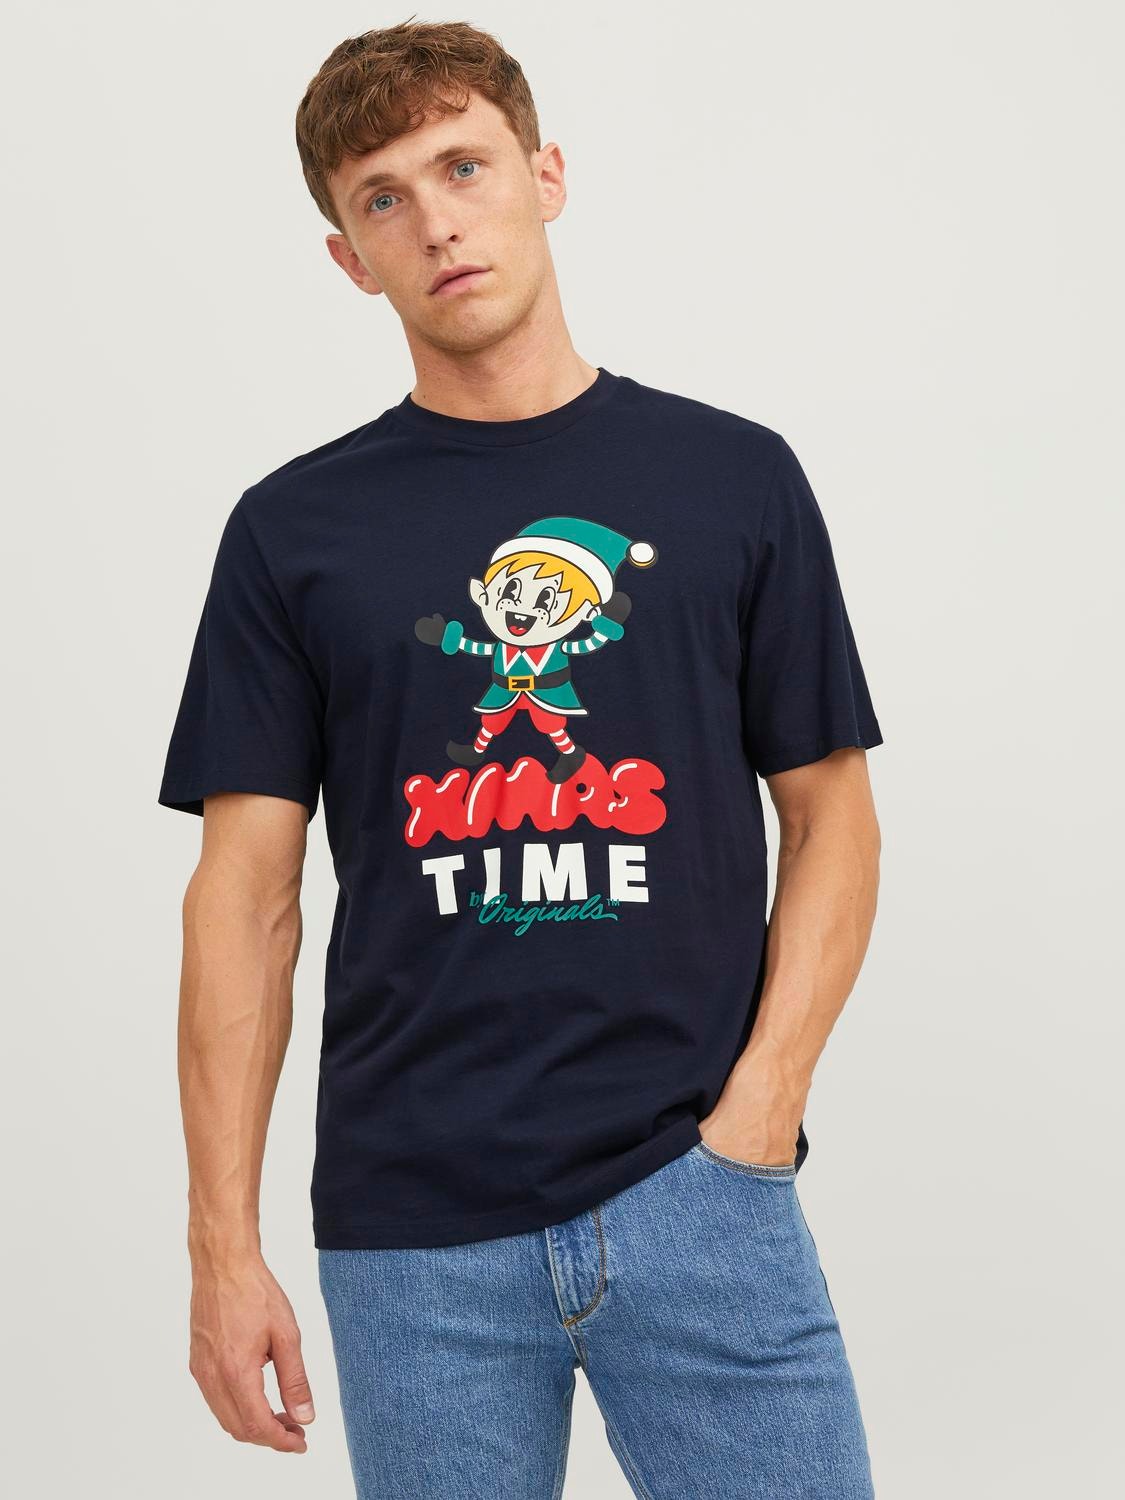 Jack & Jones X-mas Rundhals T-shirt -Sky Captain - 12246603